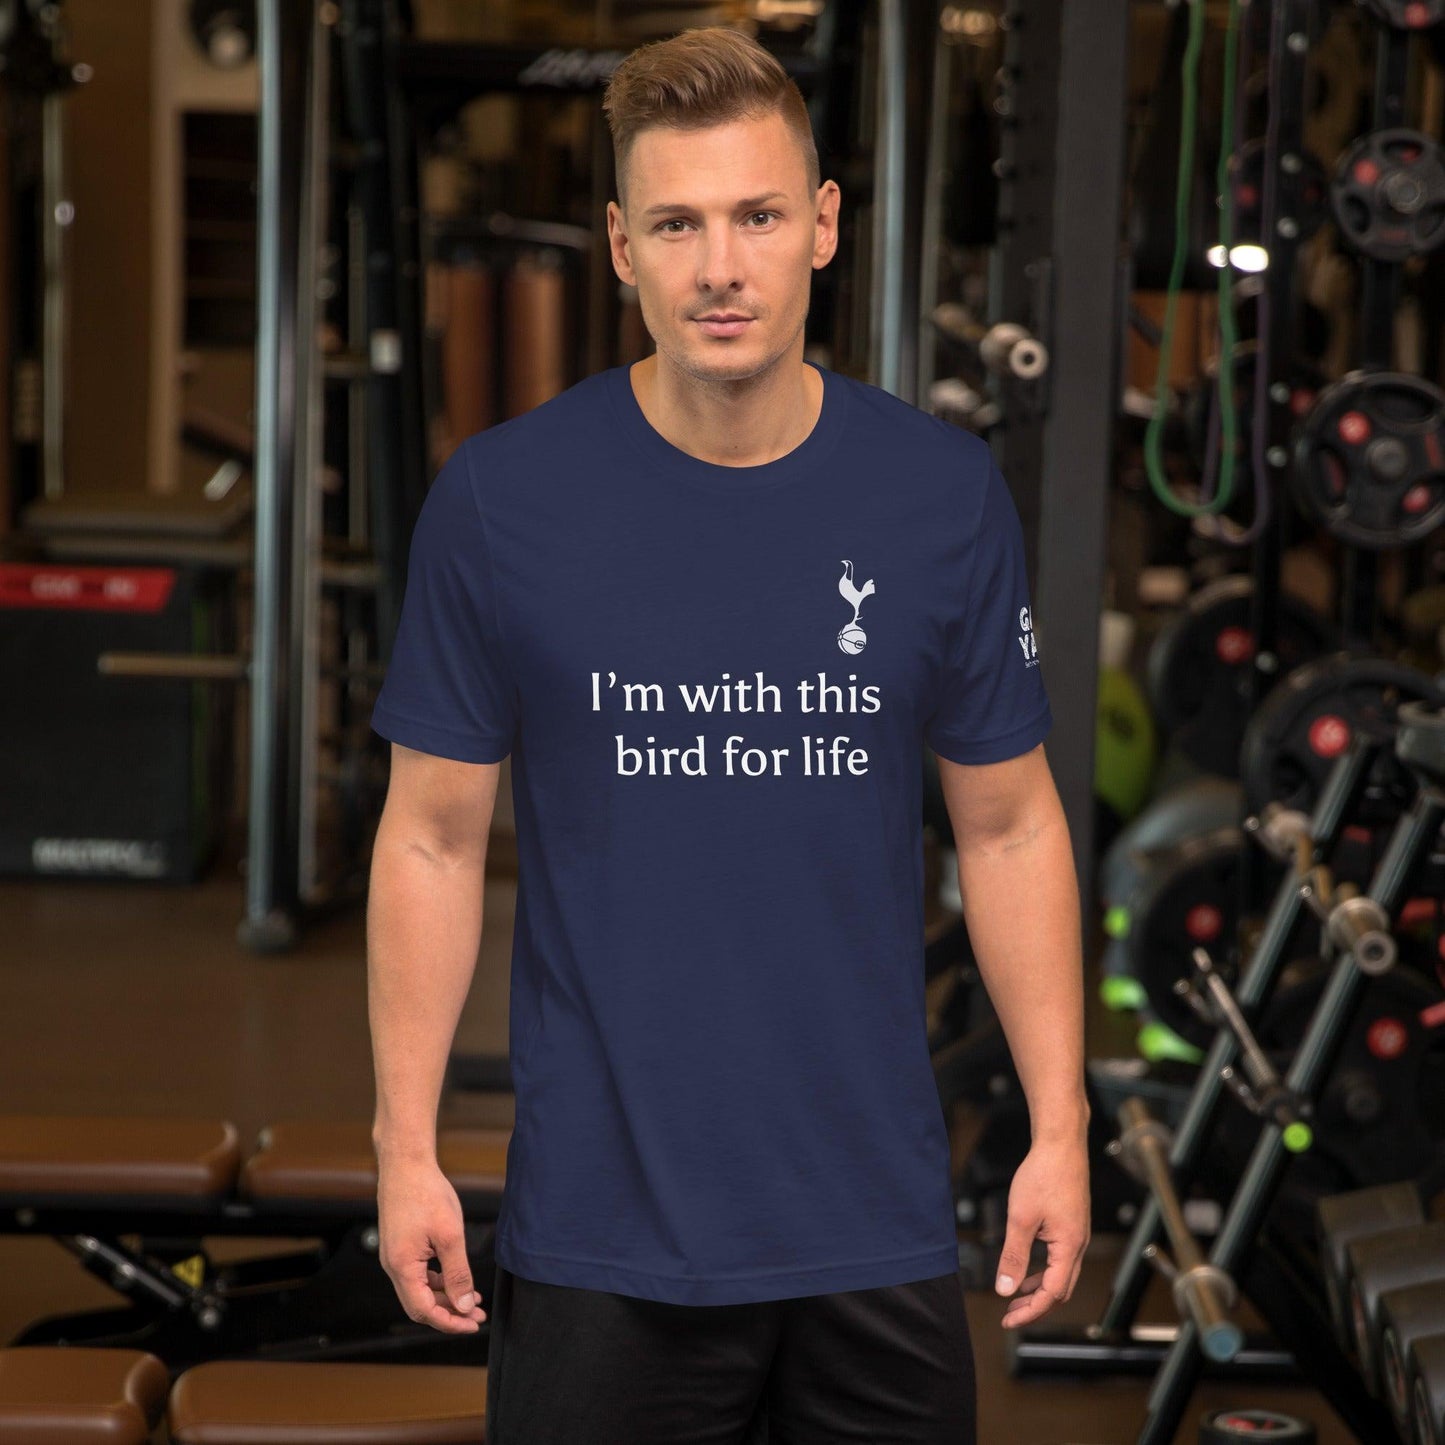 Tottenham Bird for Life T-shirt - Game Yarns